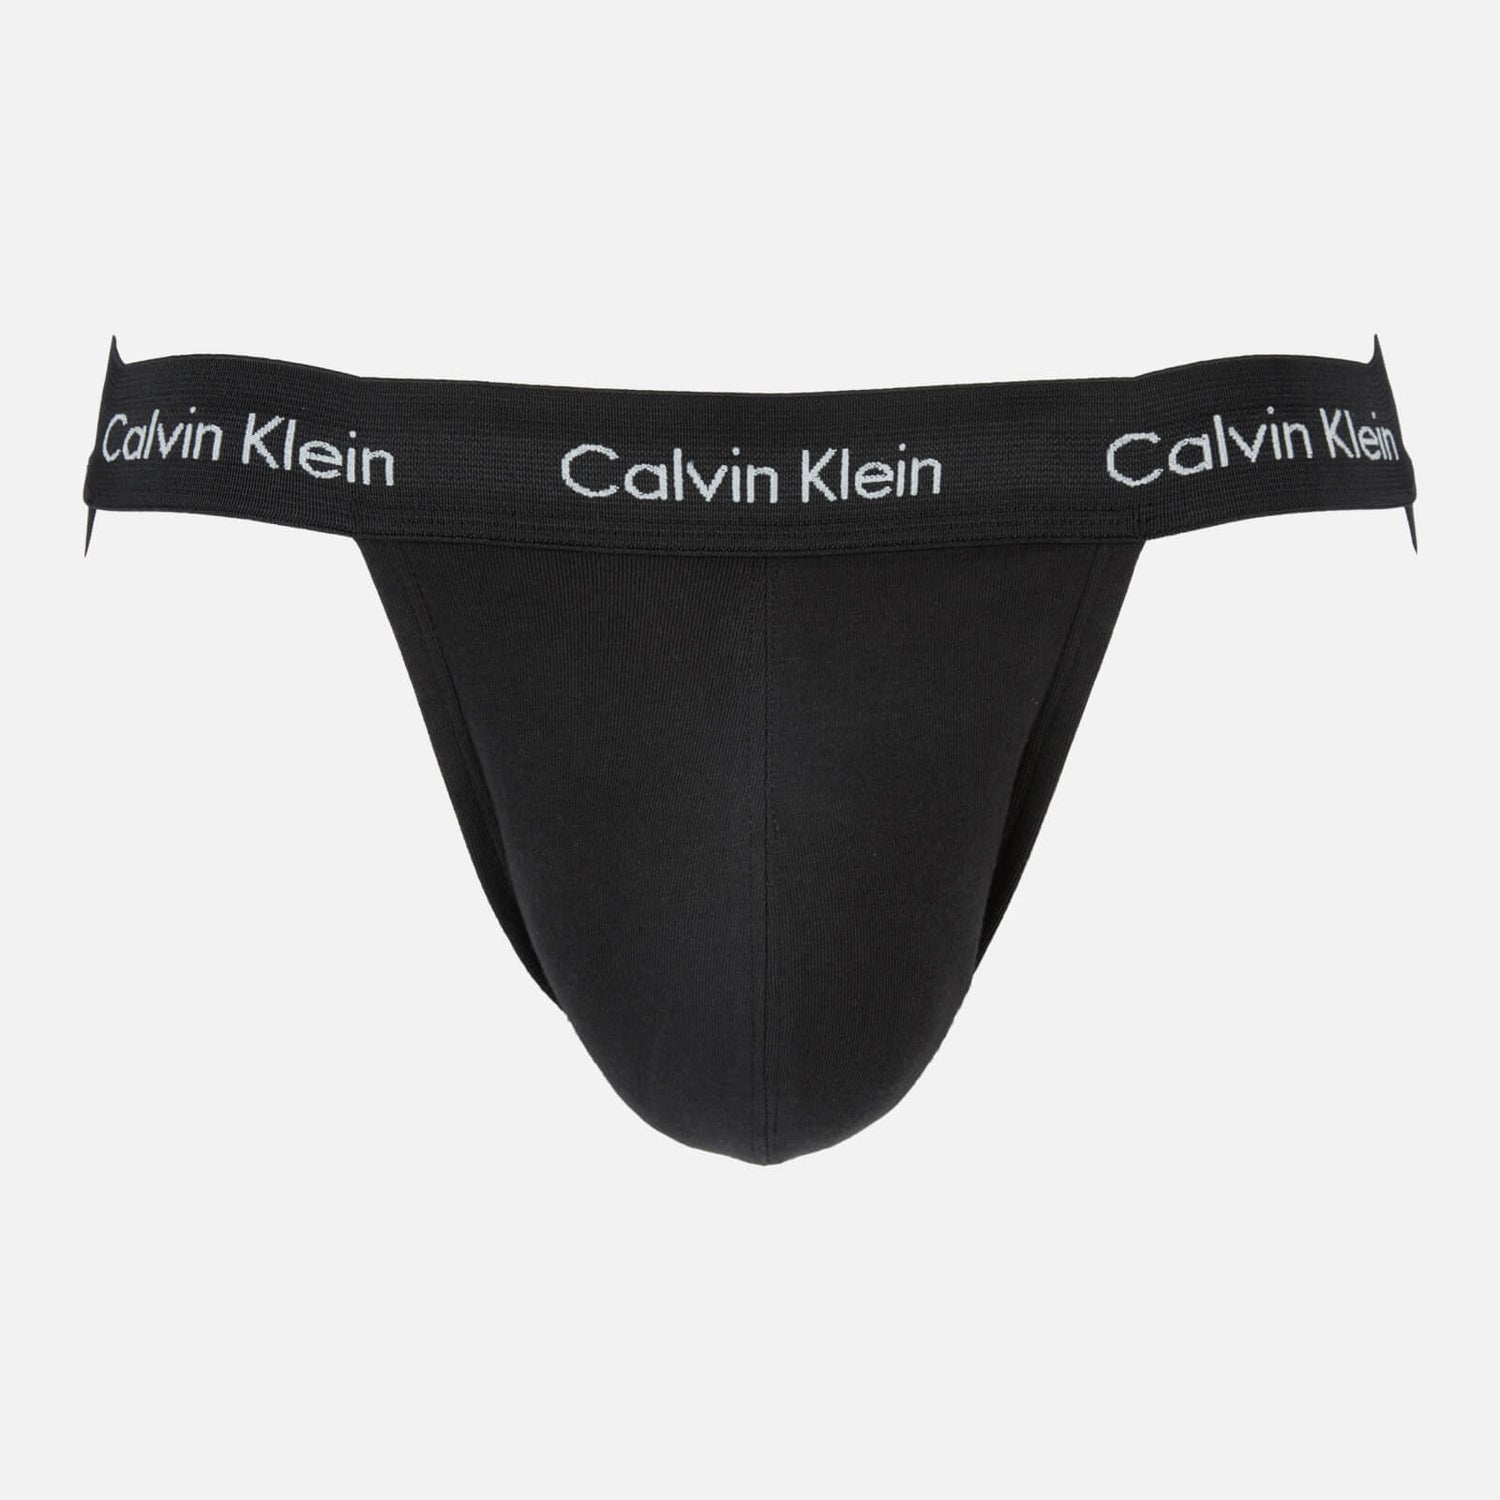 Calvin Klein Men's 2-Pack Jock Strap - Black - L